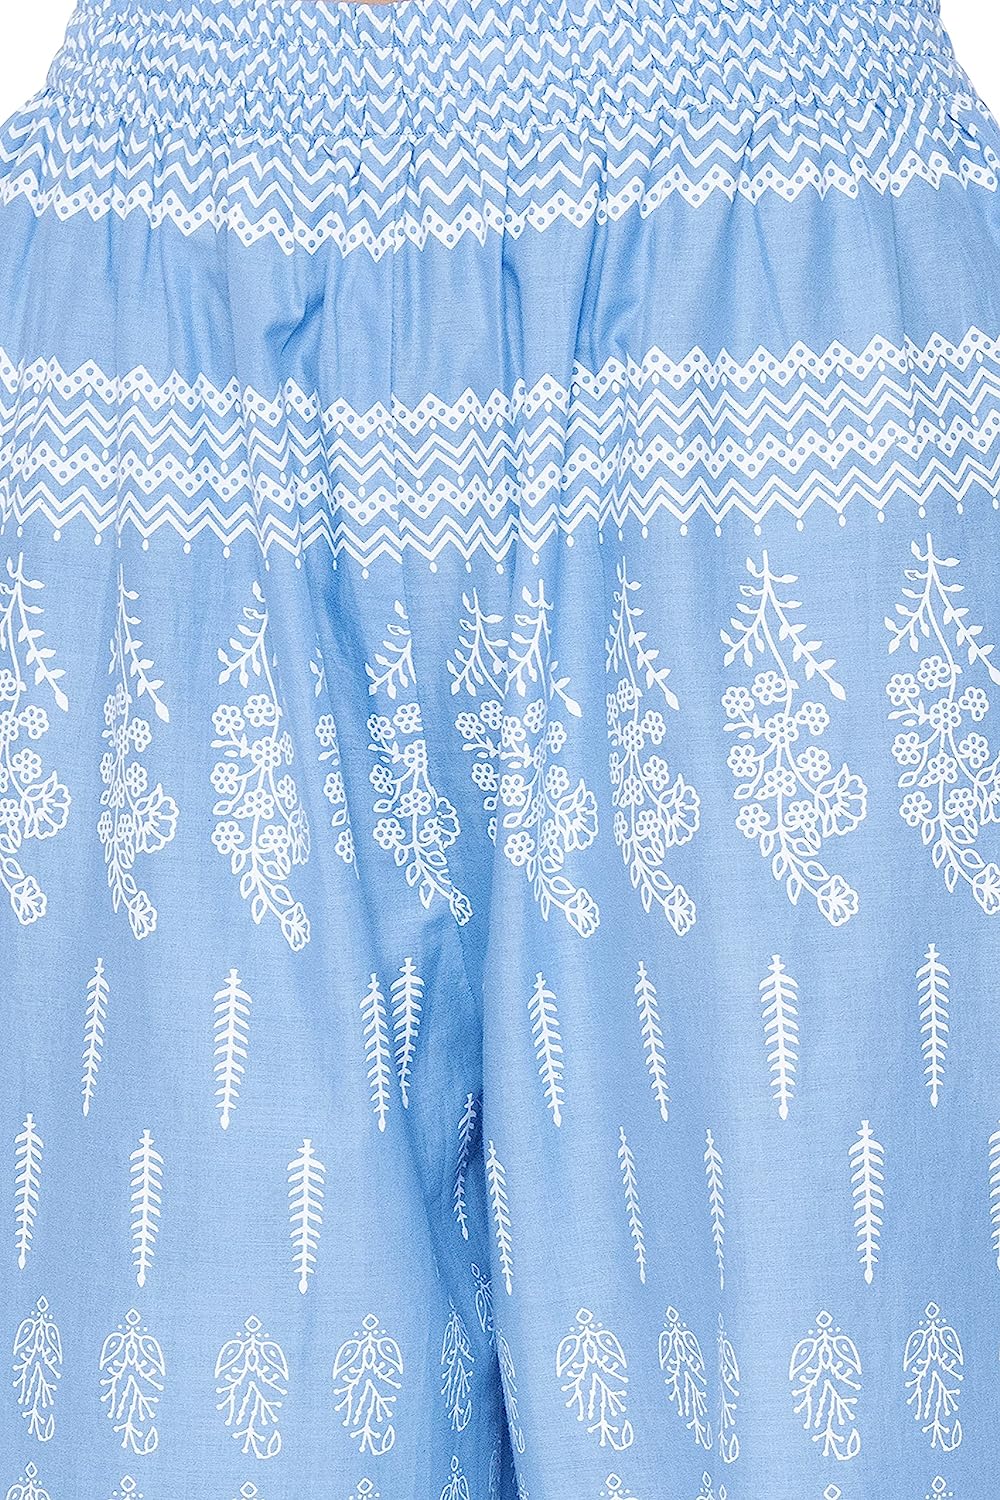 Amayra Women's Cotton Printed Straight Kurti with Palazzos Set -  Kurtas & Kurtis in Sri Lanka from Arcade Online Shopping - Just Rs. 4999!